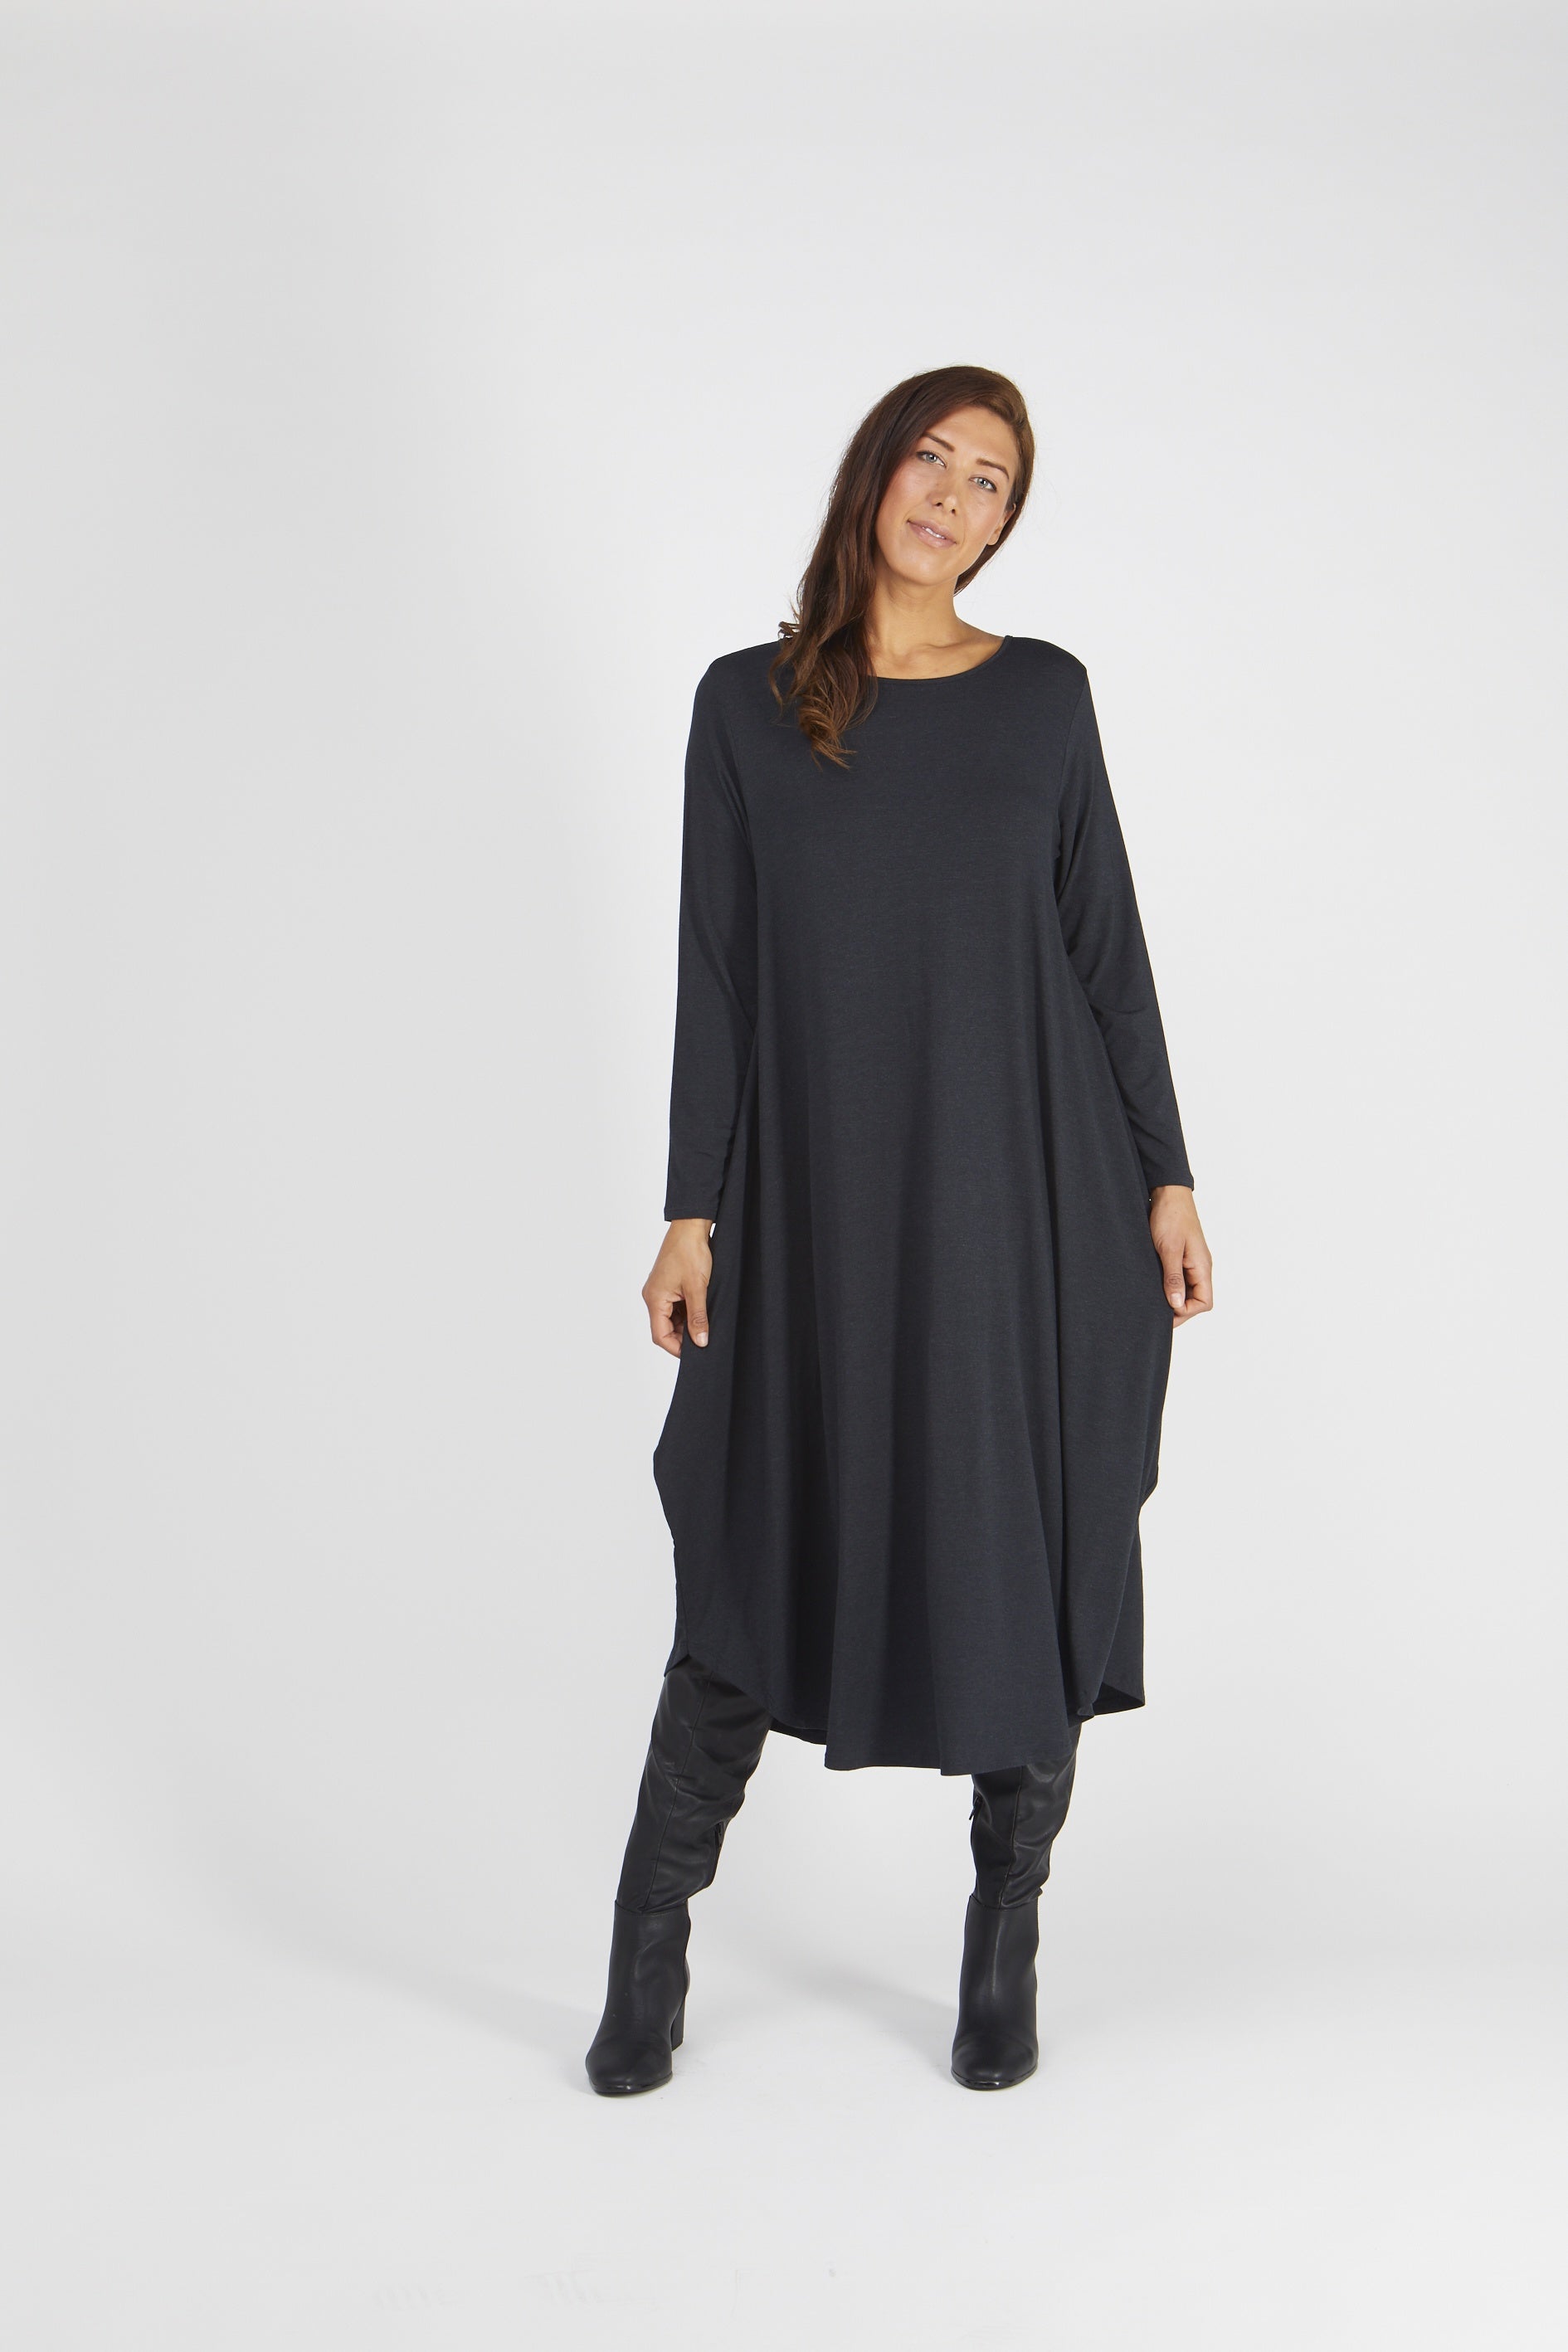 Long sleeve tri dress - Ravir Boutique